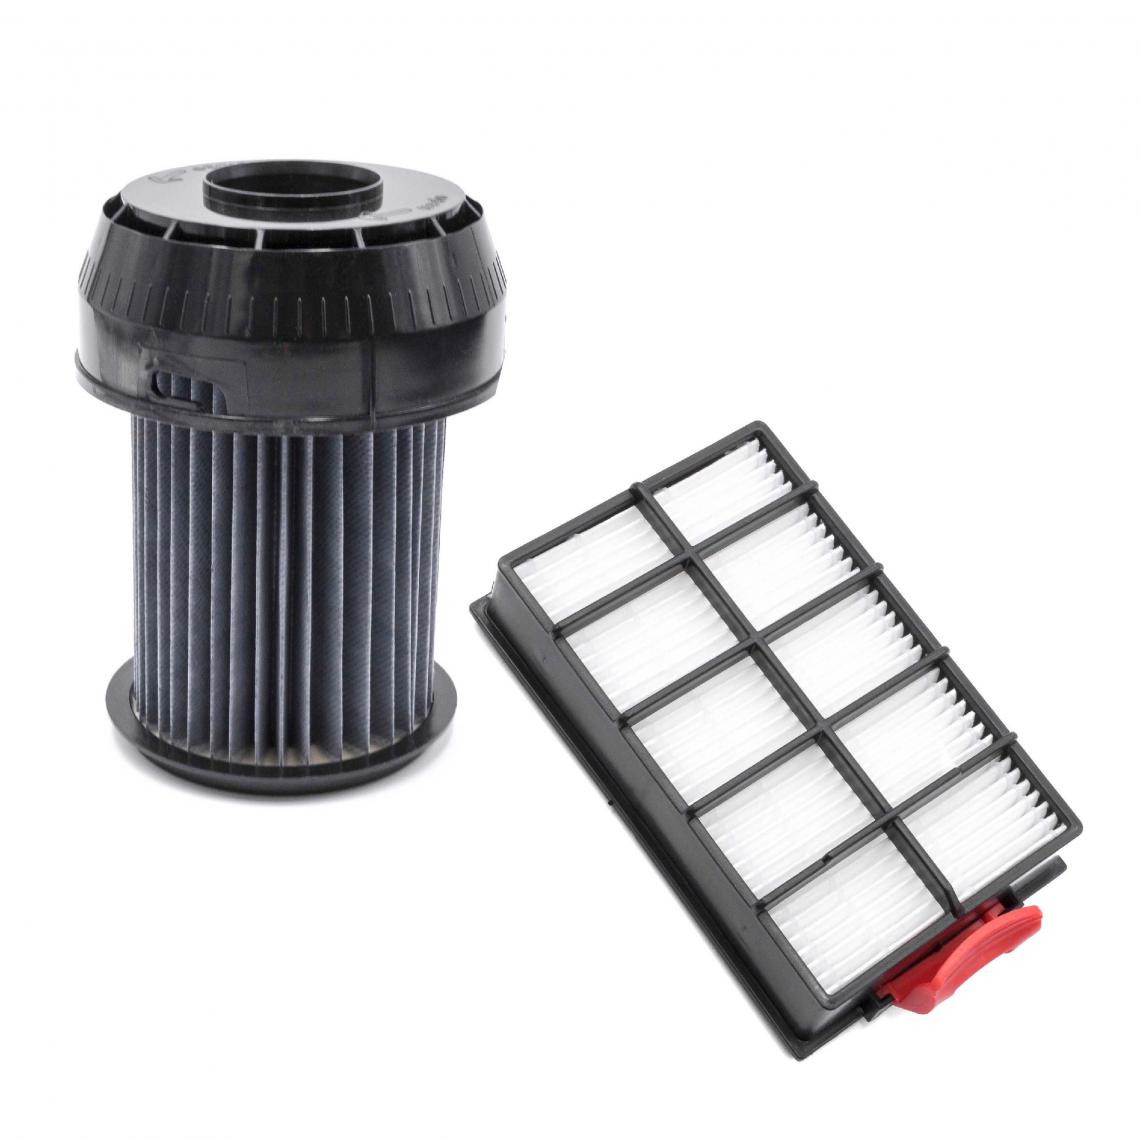 Vhbw - vhbw Lot de filtres compatible avec Bosch BGS6235GB01, BGS6253001, BGS6253101 aspirateur - 2x Filtres de rechange - Accessoire entretien des sols